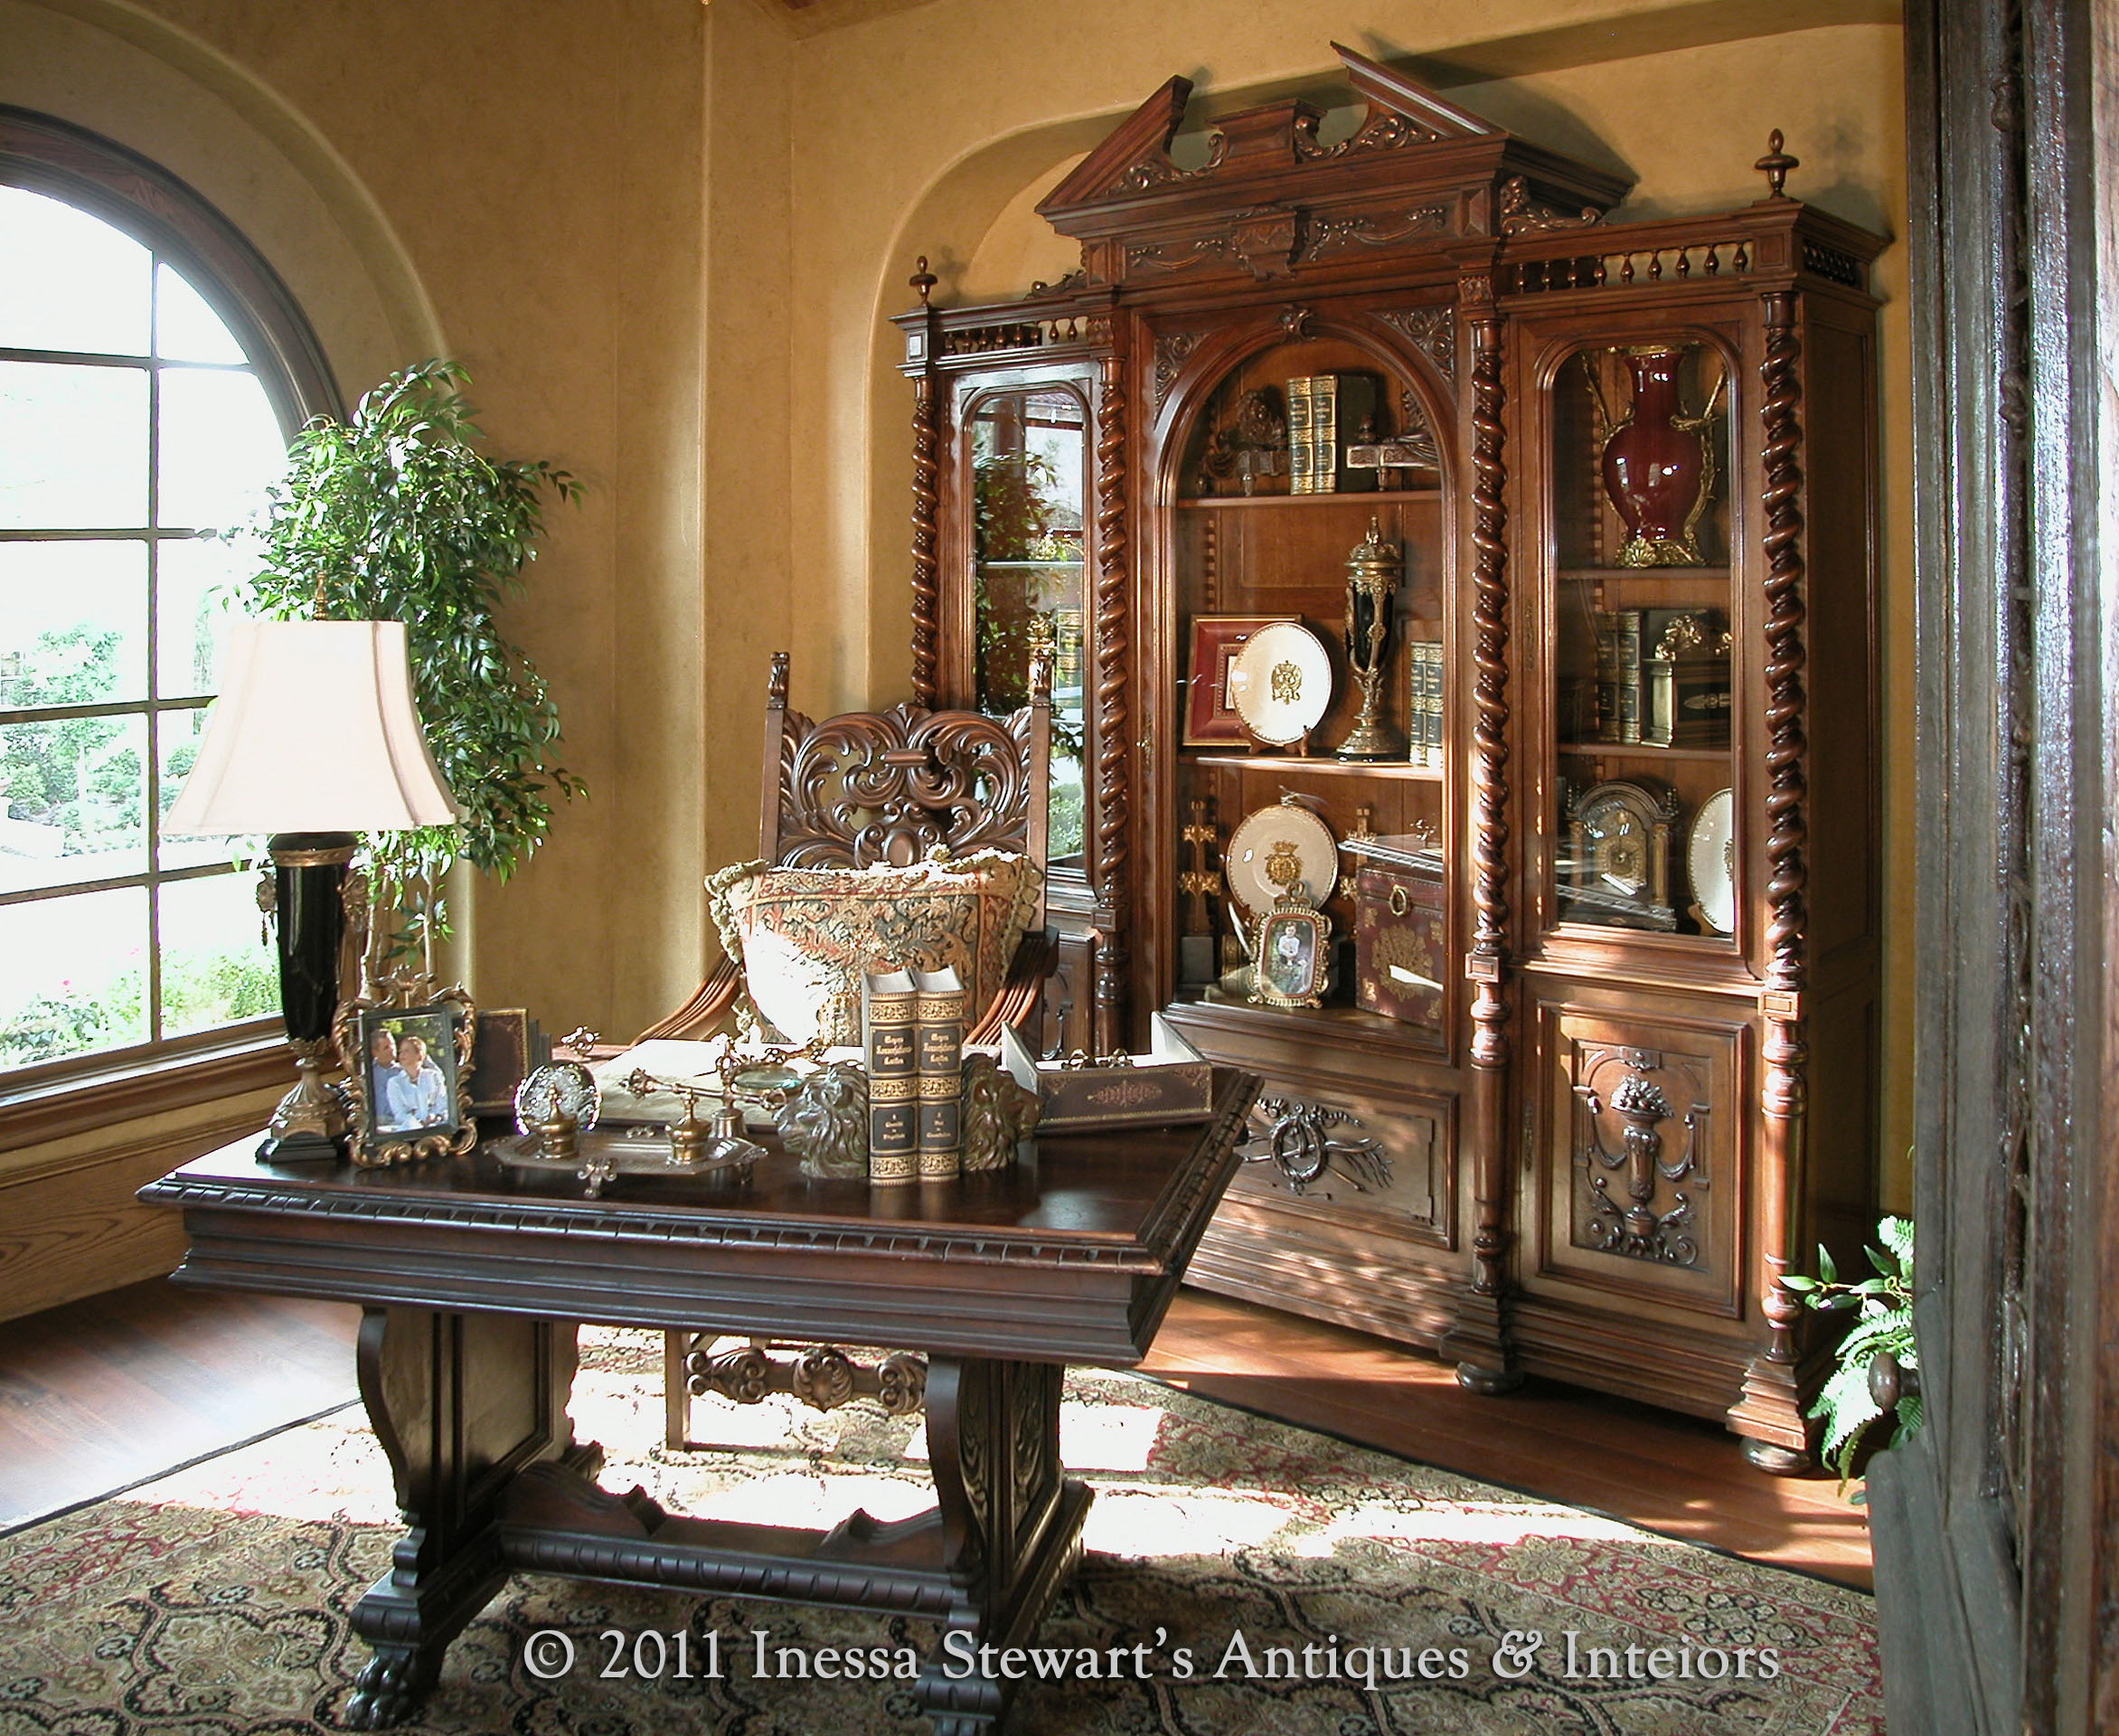 antique renaissance bedroom furniture